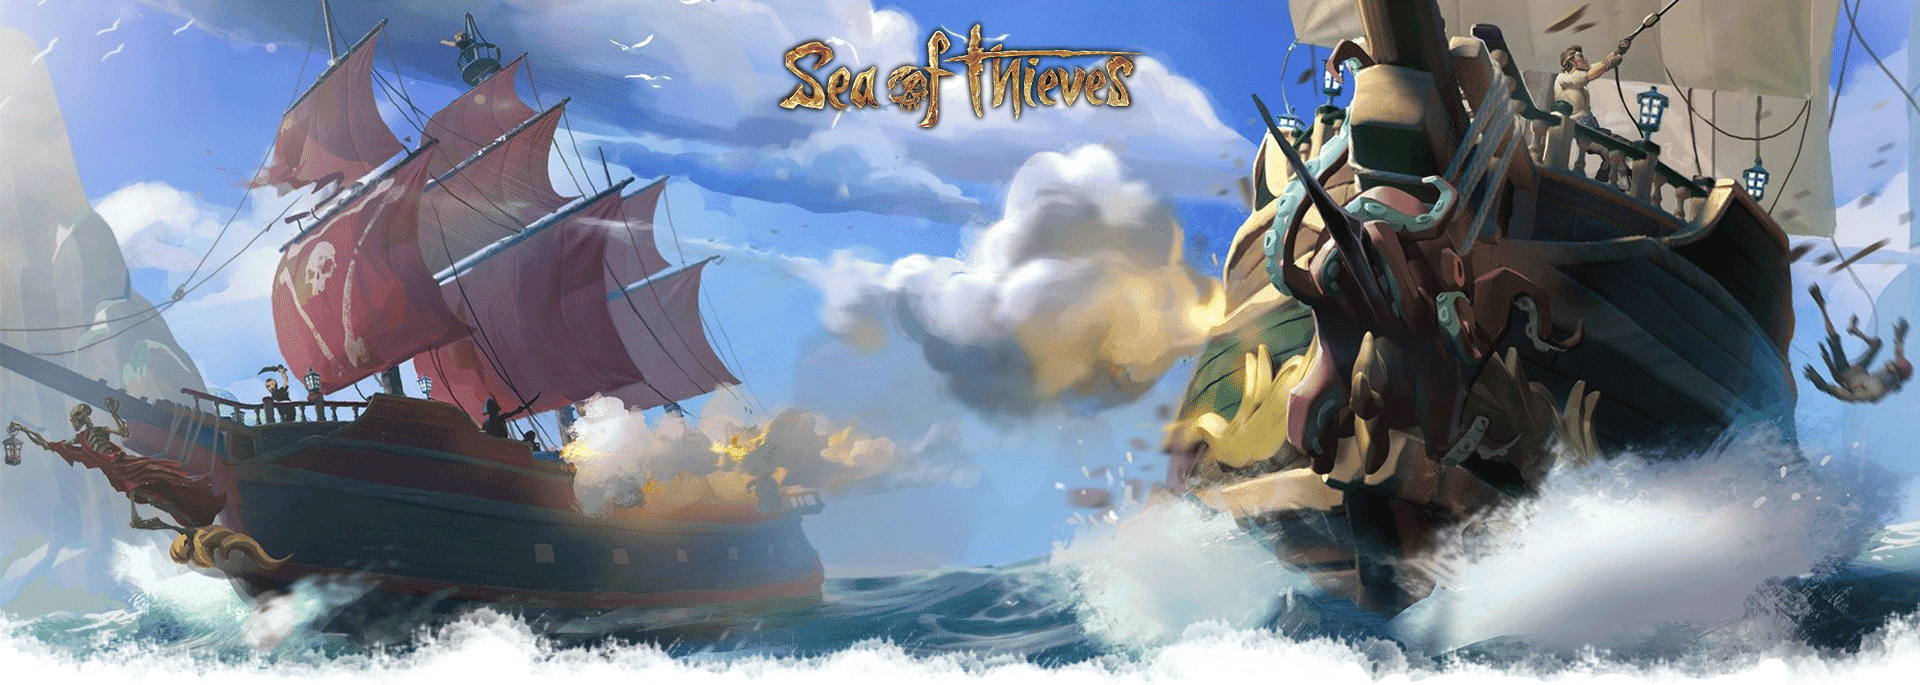 Sea of Thieves XBOX One / Windows 10 CD Key - background